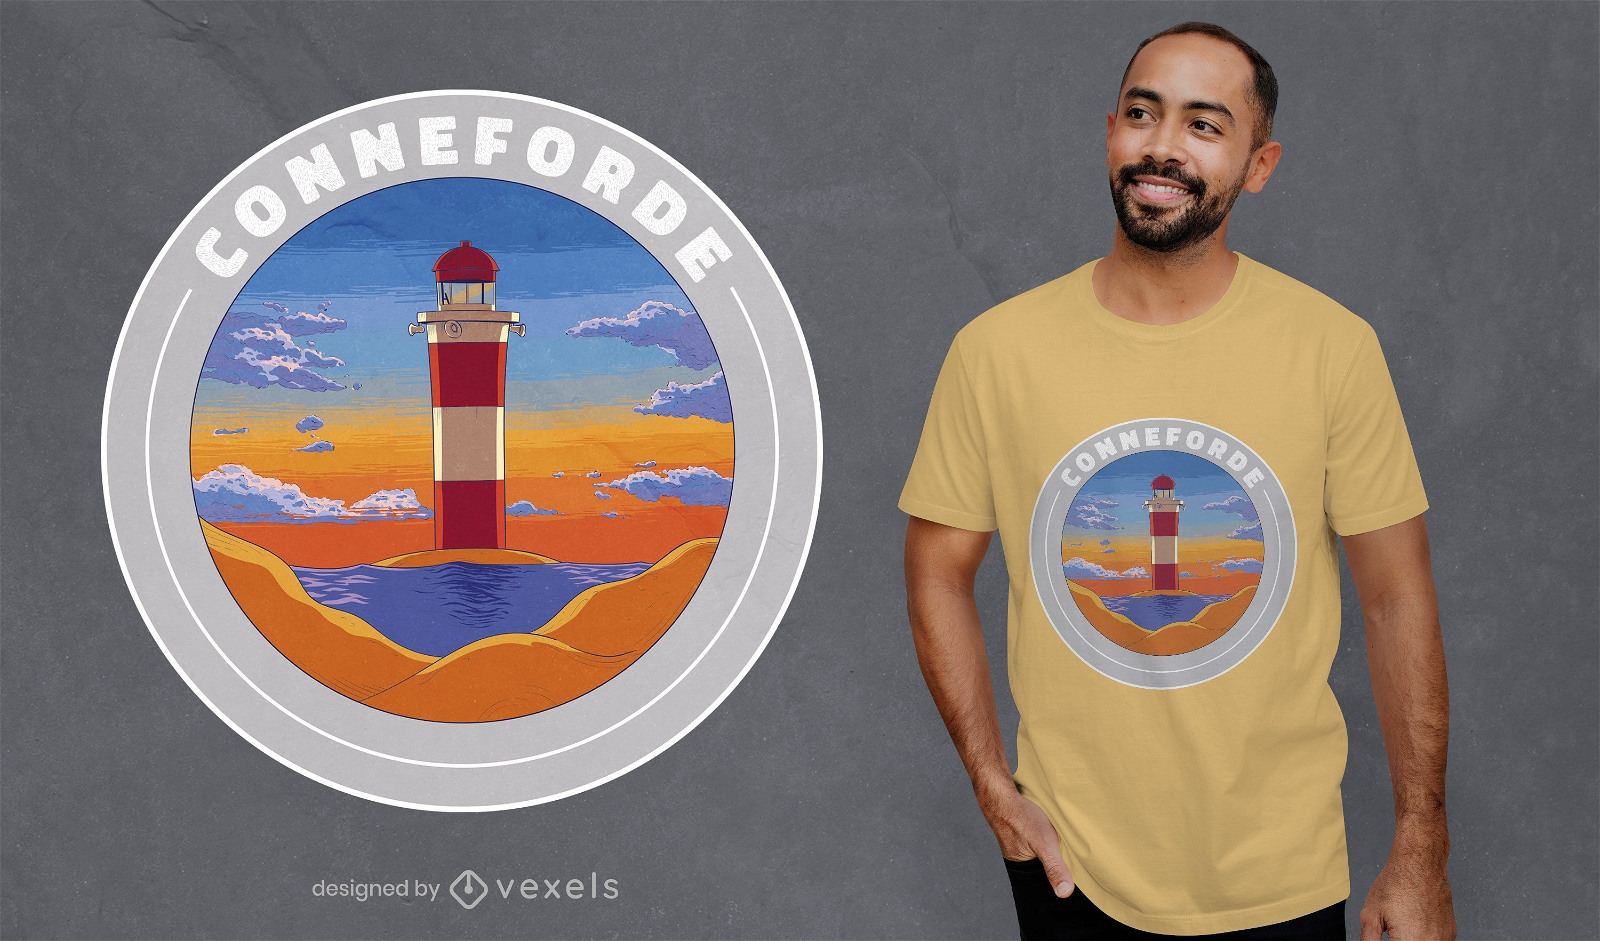 Conneforde-Leuchtturm-T-Shirt-Design